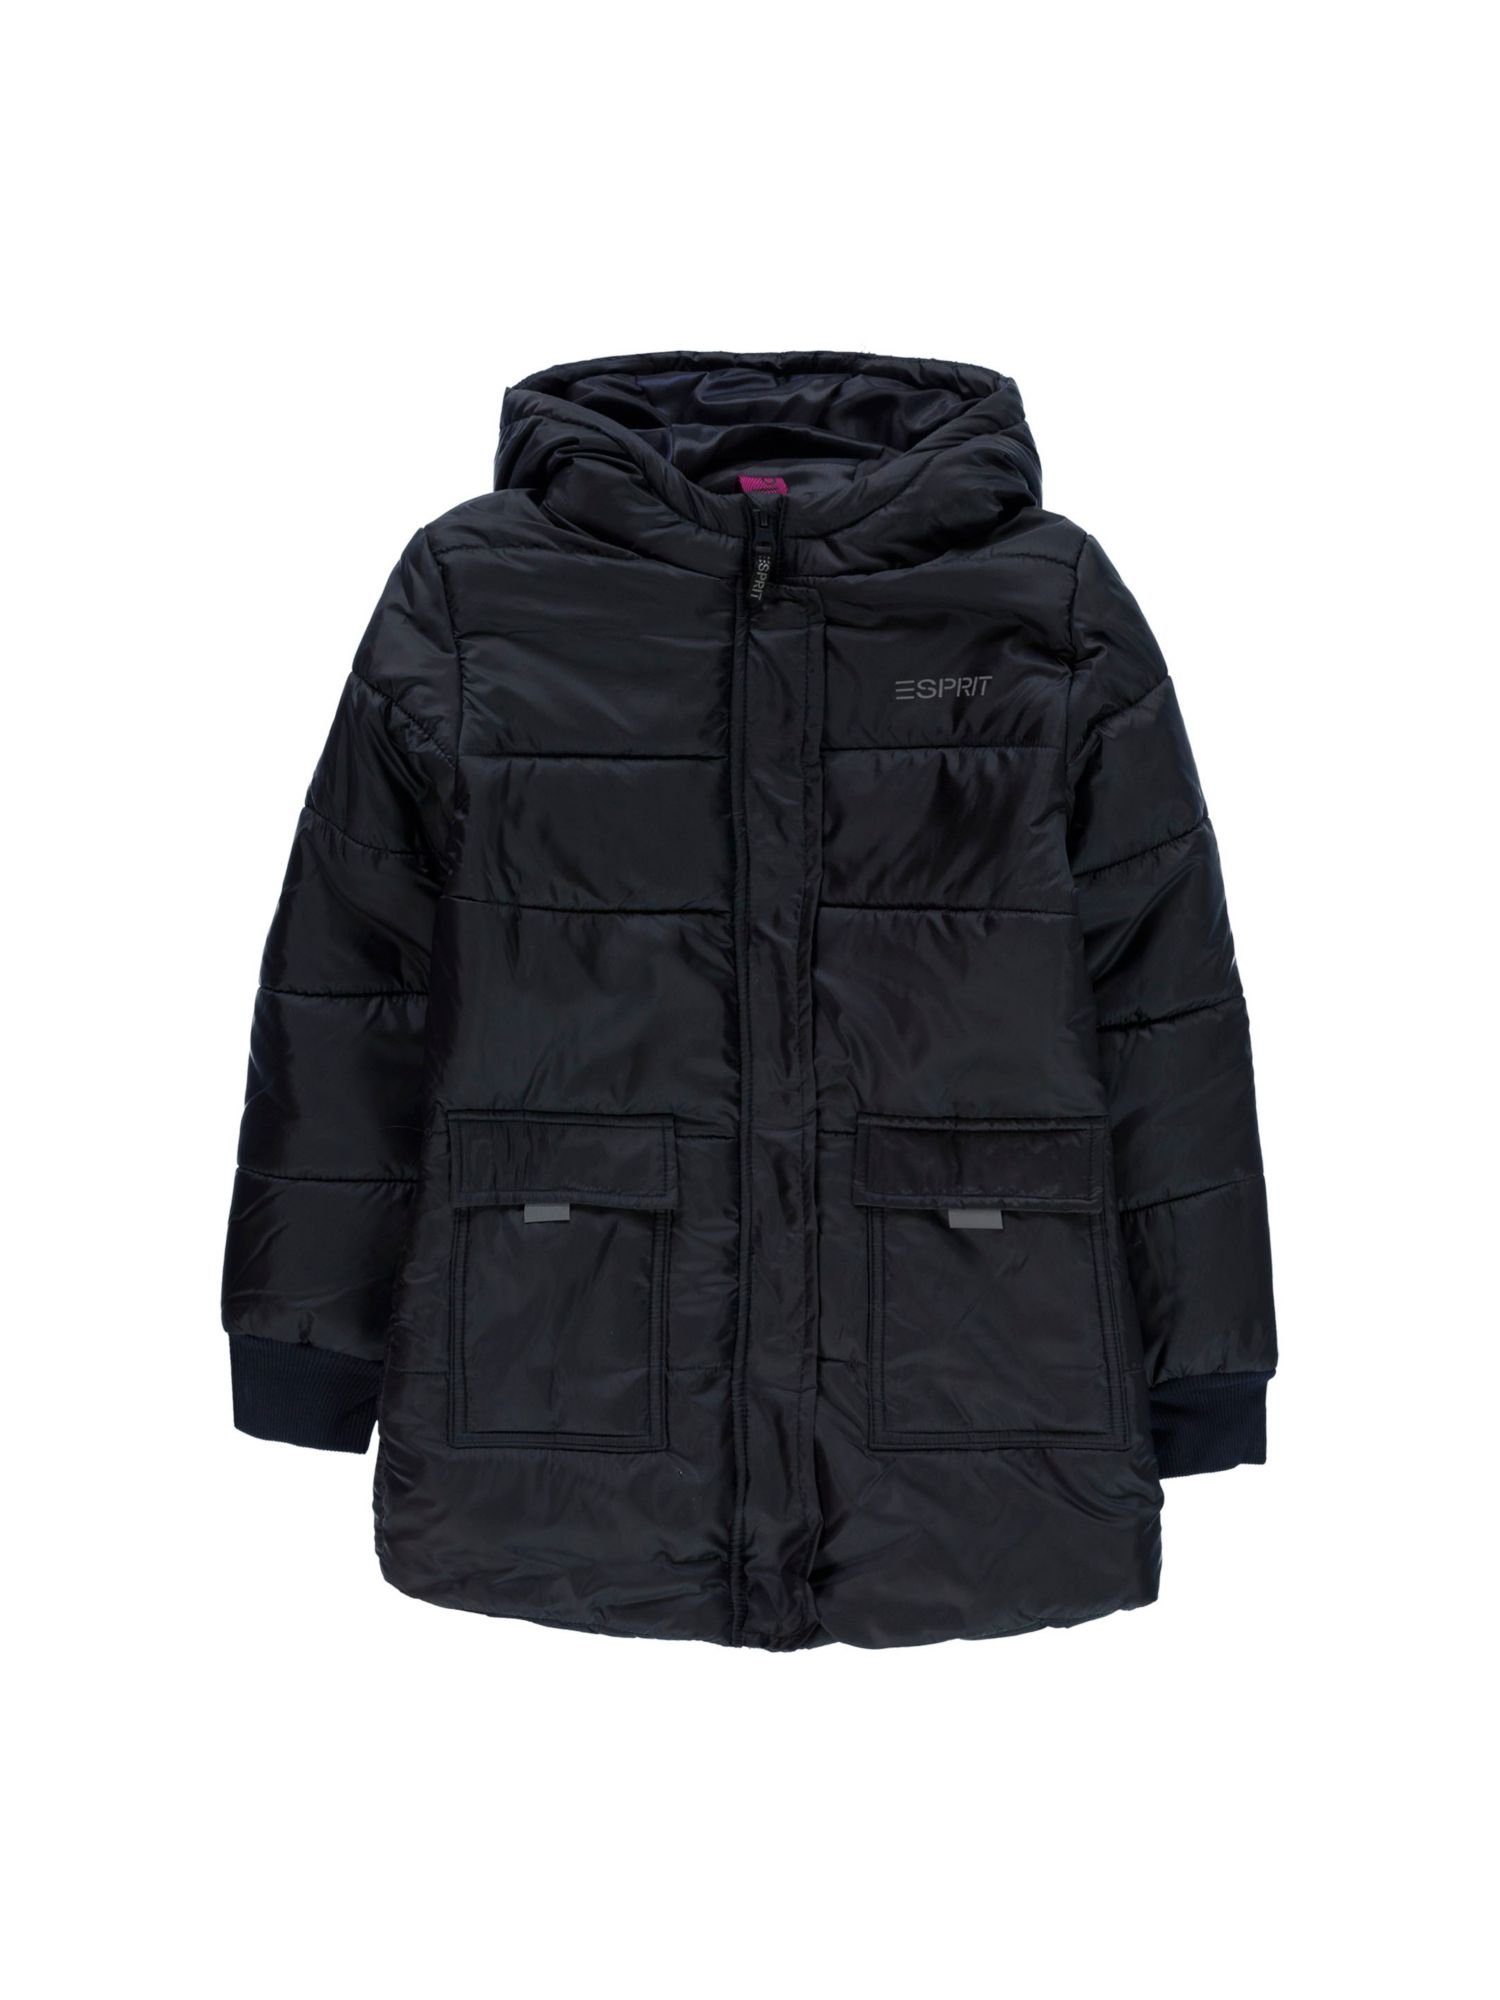 Esprit Wintermantel »Jackets outdoor woven« kaufen | OTTO